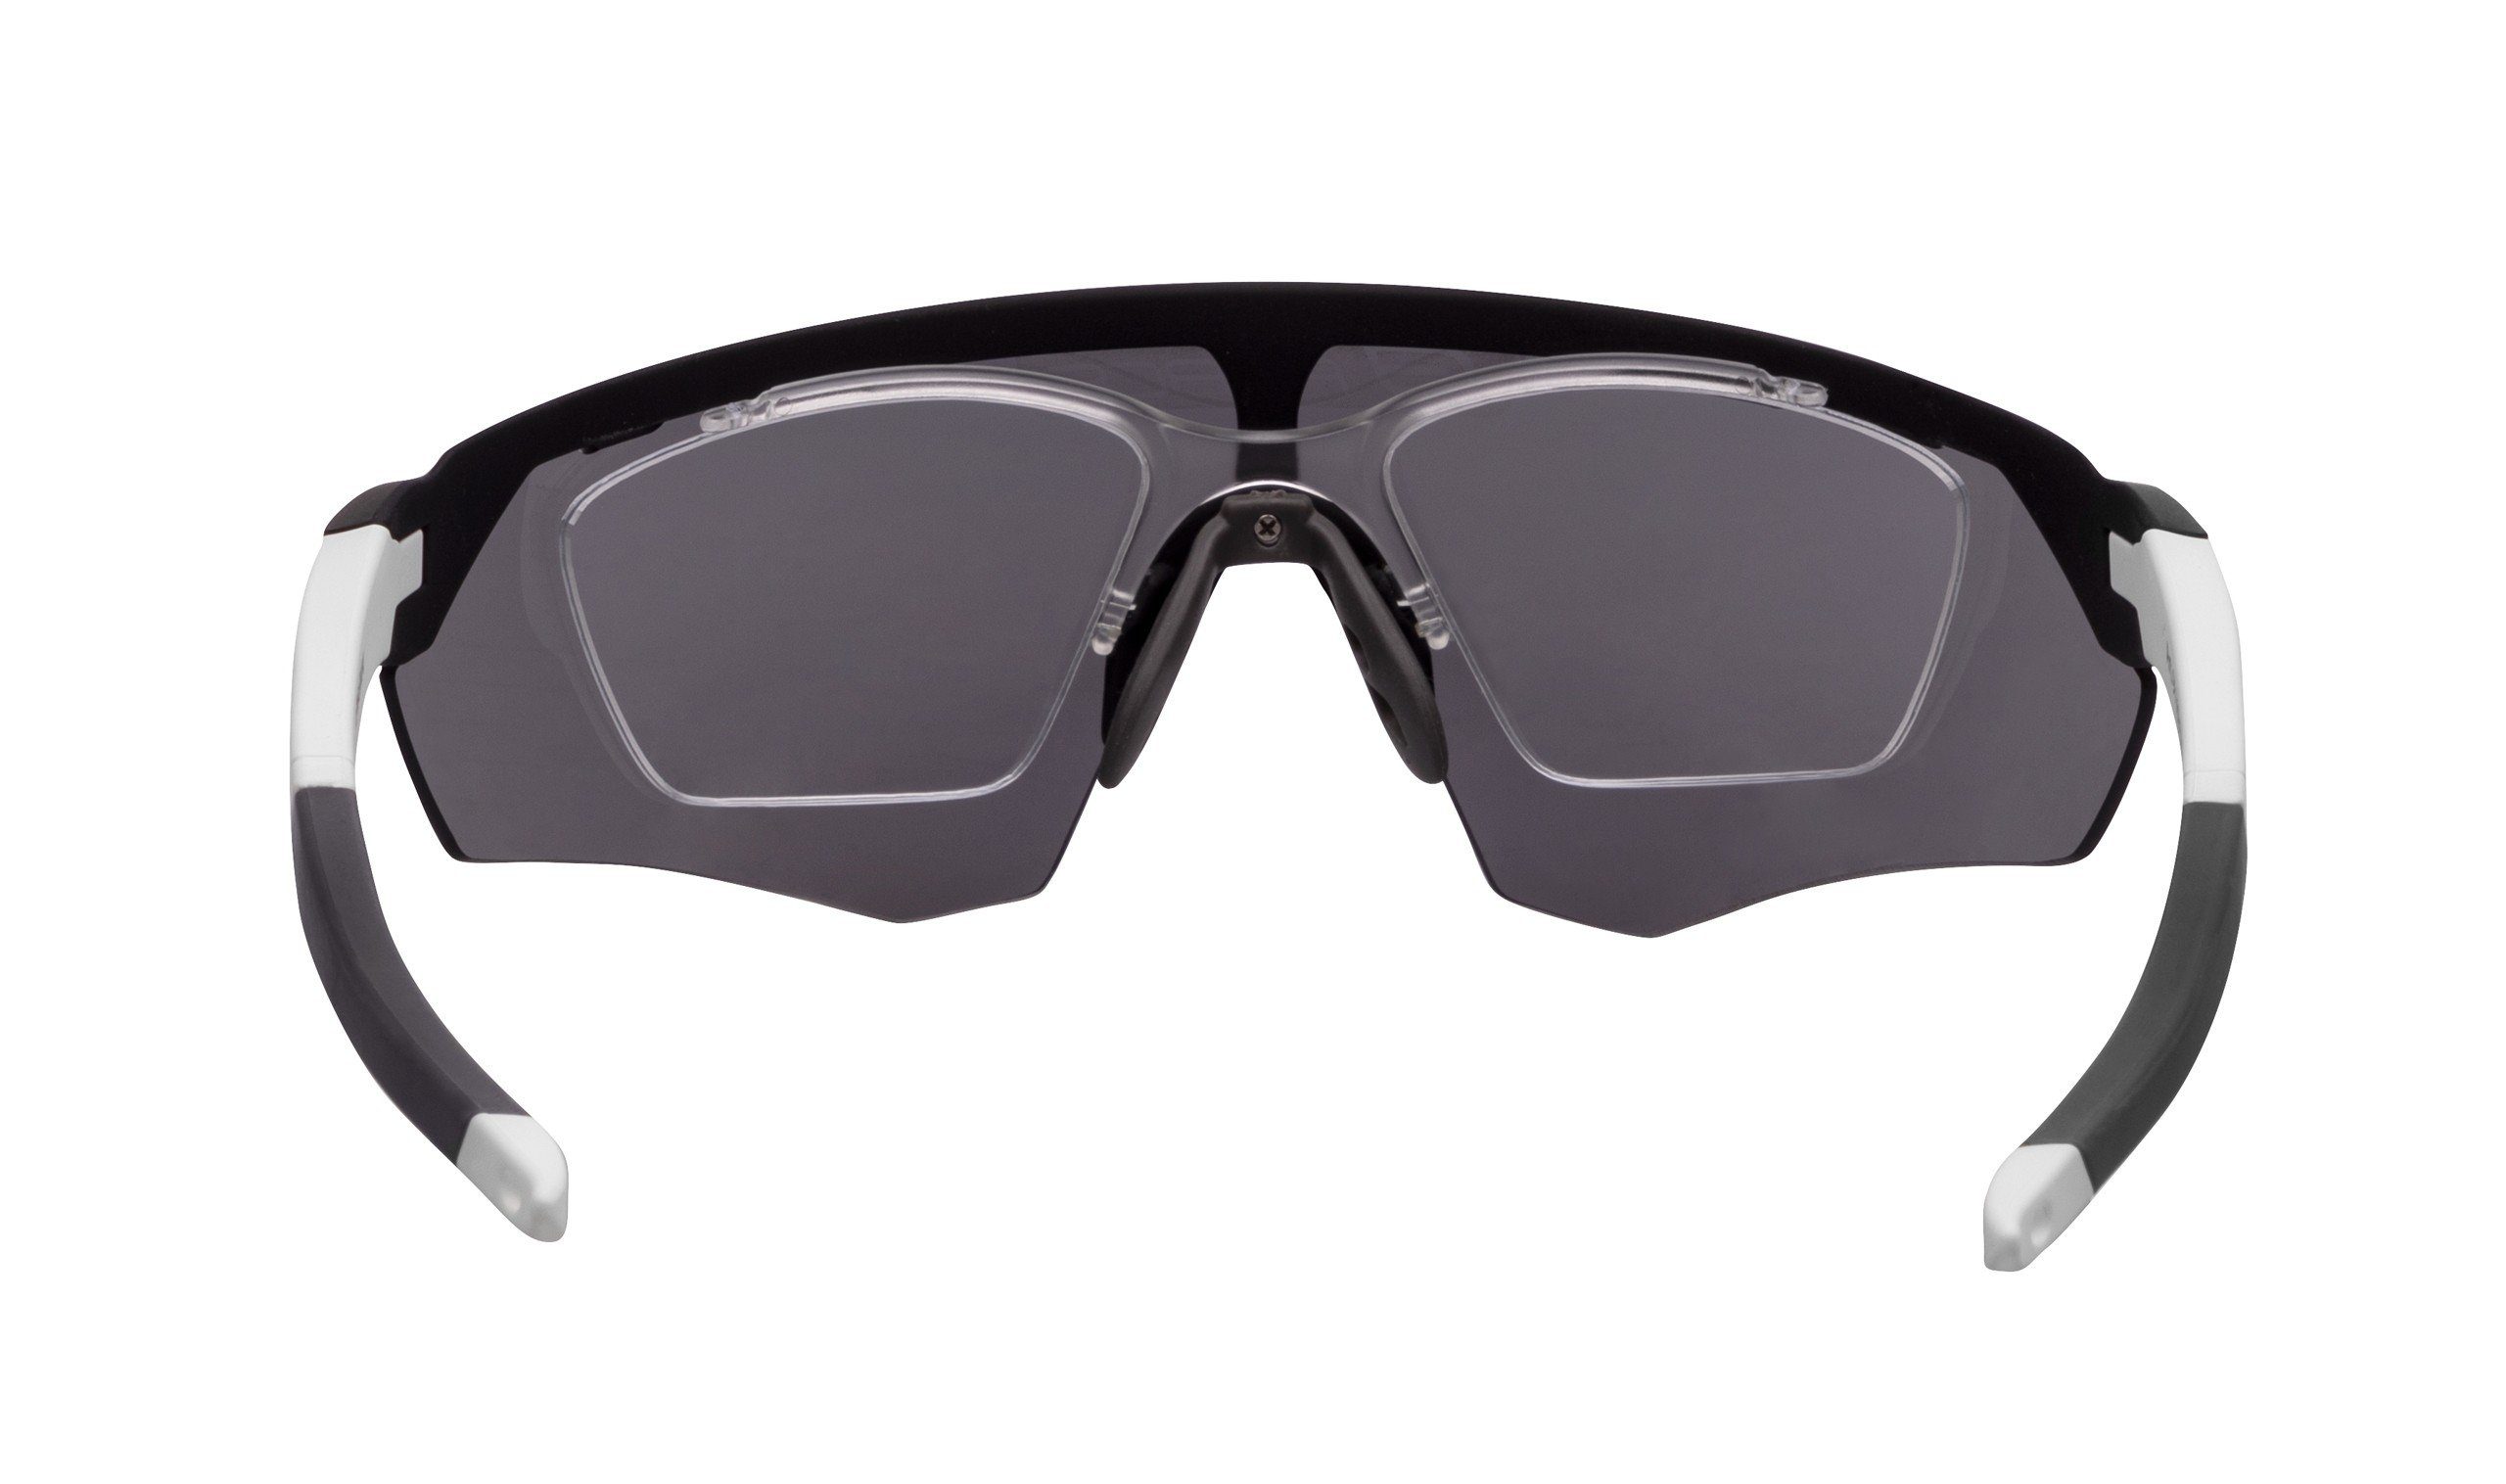 F FORCE ENIGMA weiss-grau Fahrradbrille Sonnenbrille